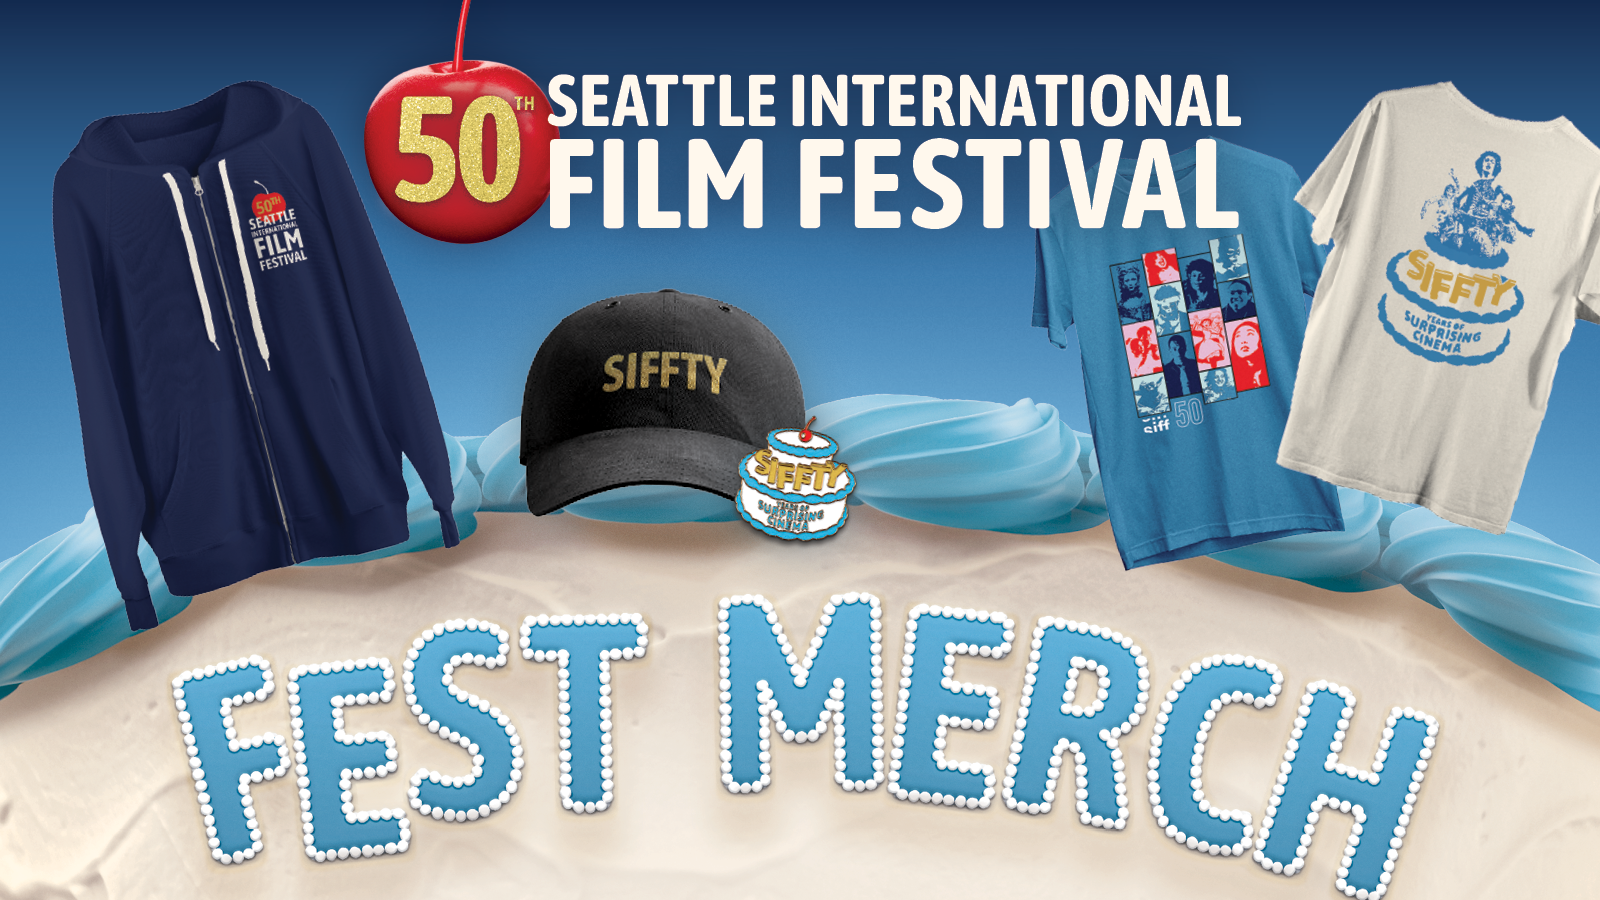 50th Seattle International Film Festival Merch is Here!